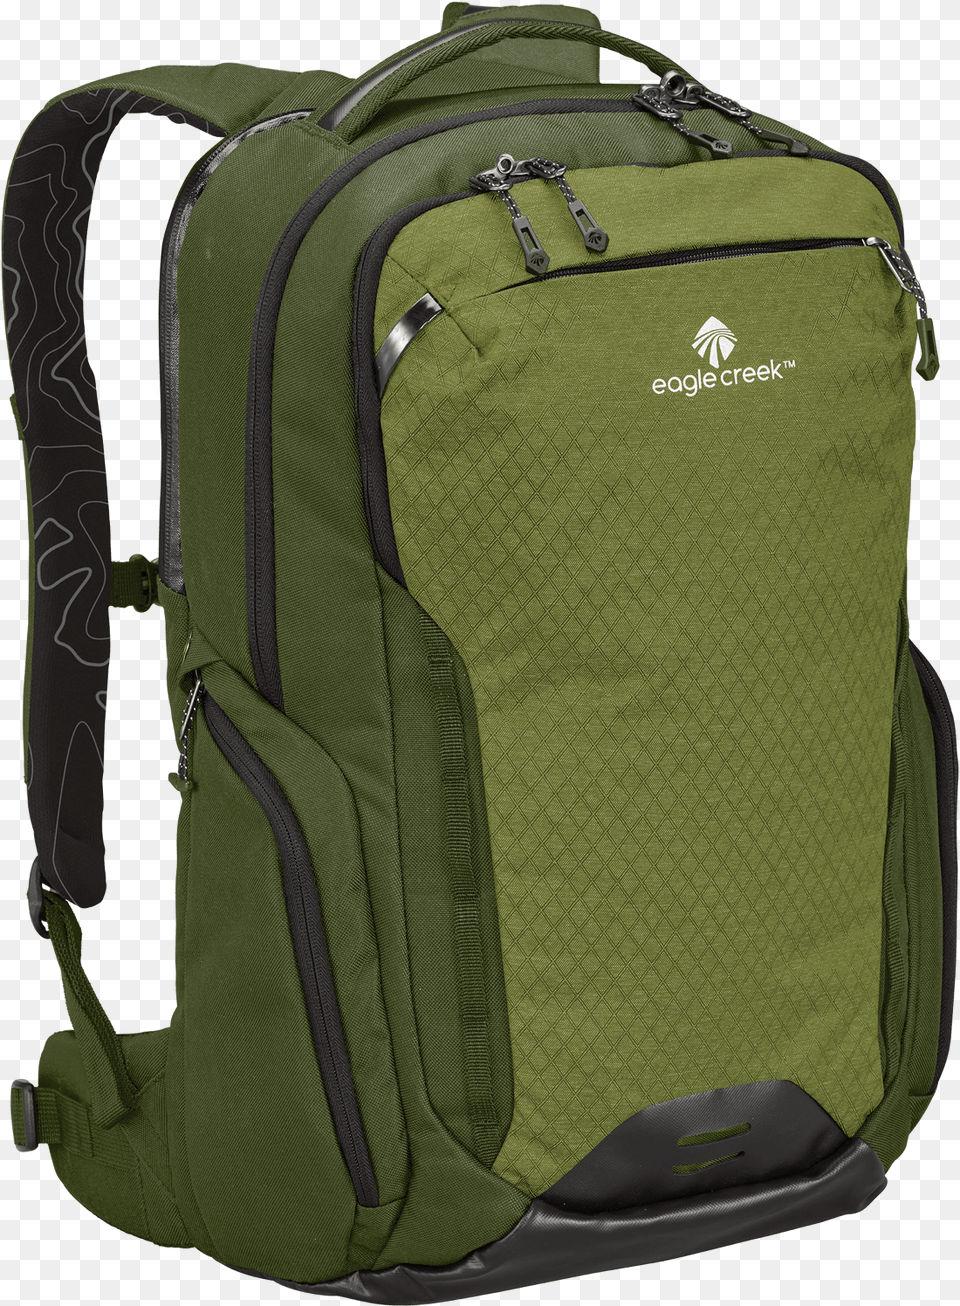 Backpack, Bag Free Png